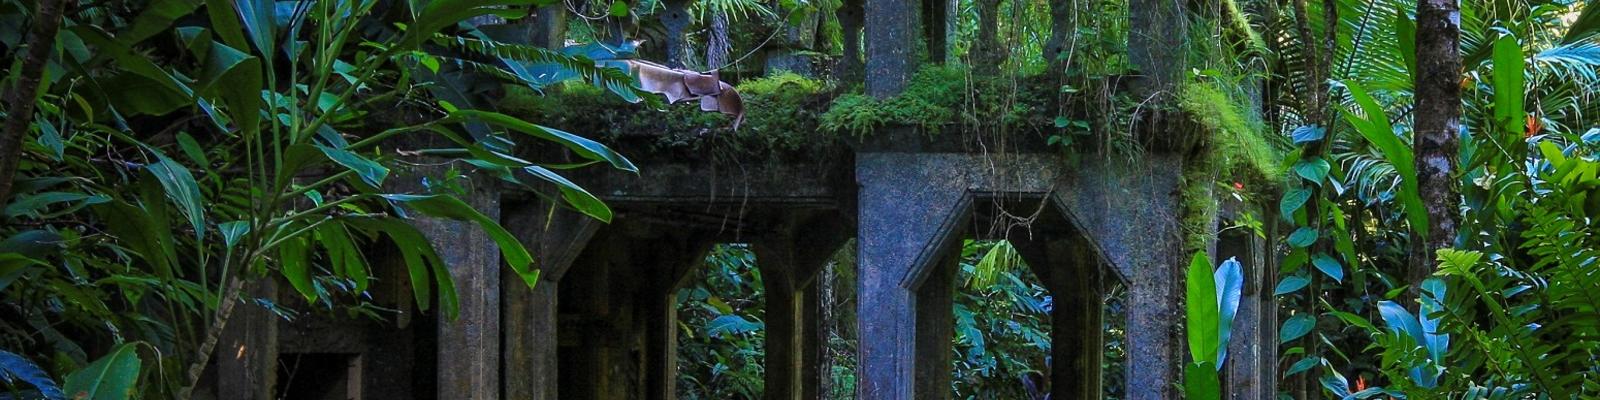 Overgrown ruins in rainforest setting of Paronella Park, Queensand.